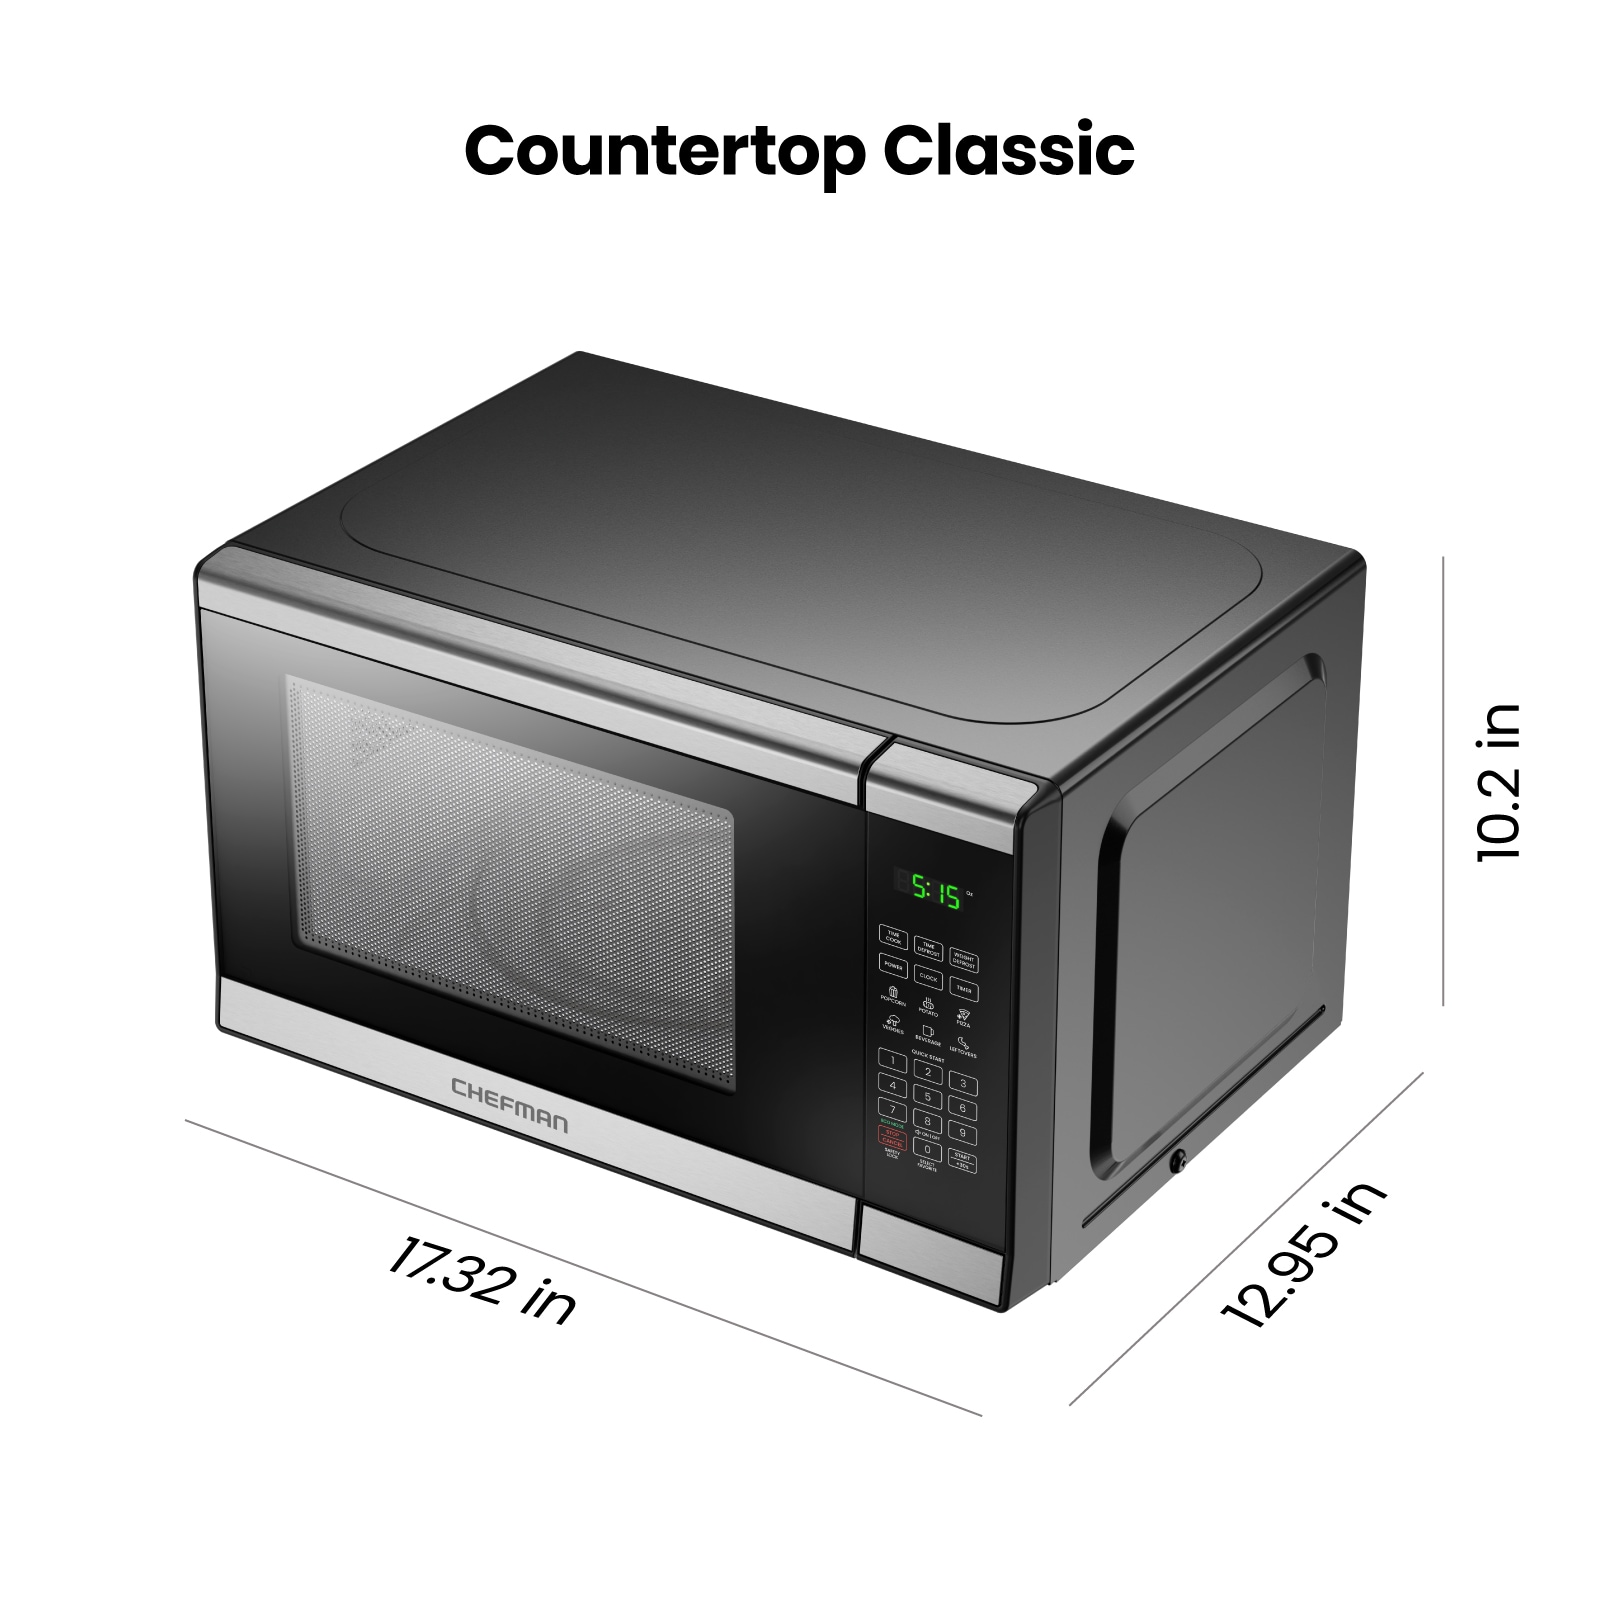 Insignia - 0.7 Cu. ft. Compact Microwave - Black